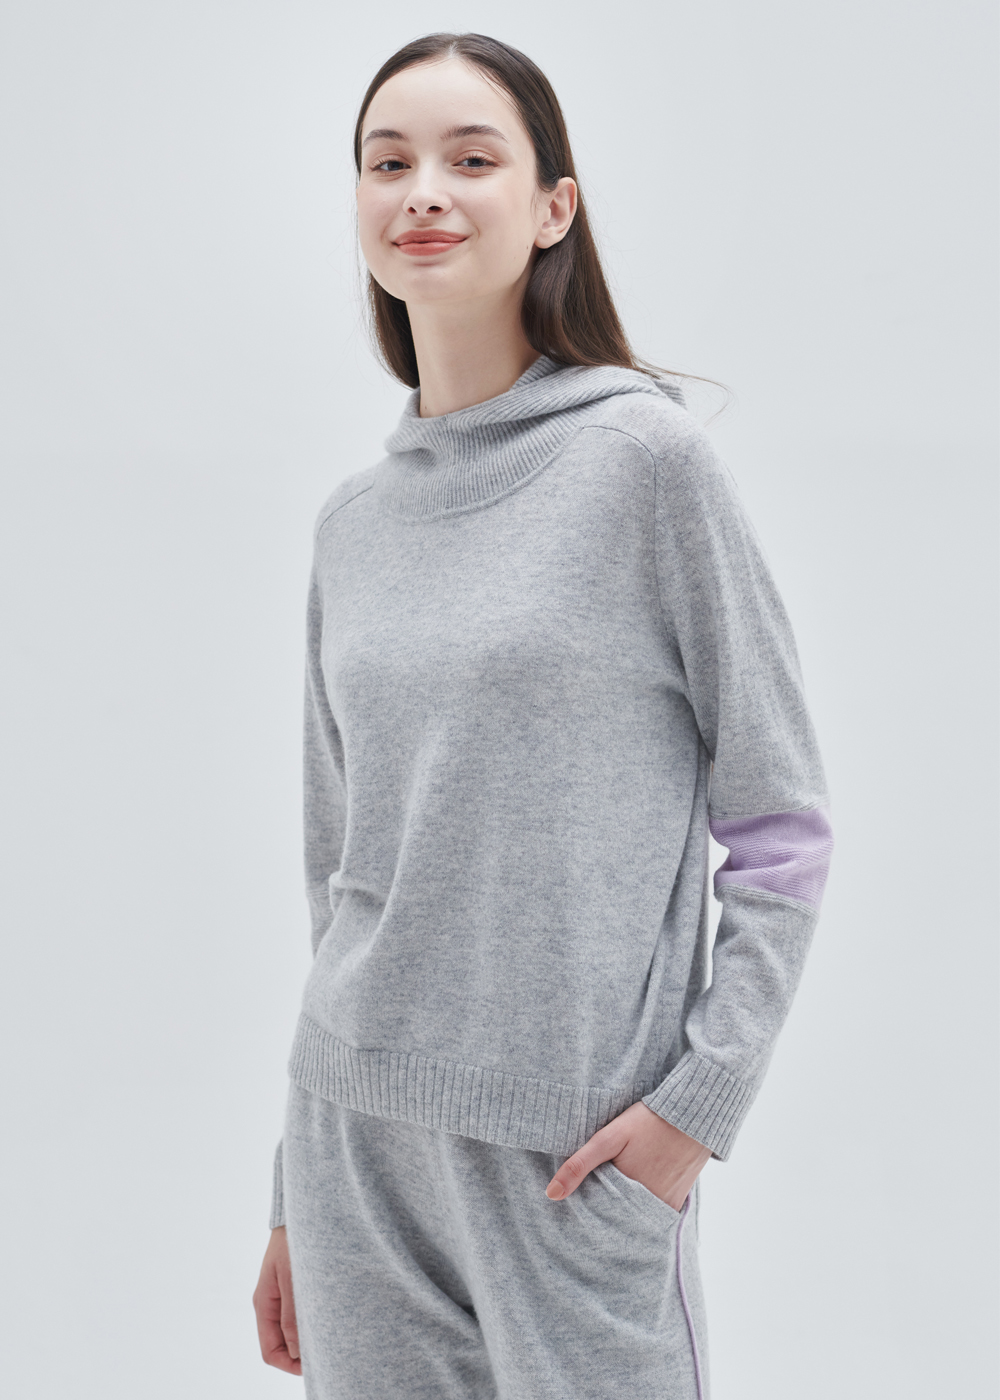 High neck hoody pullover(light grey)